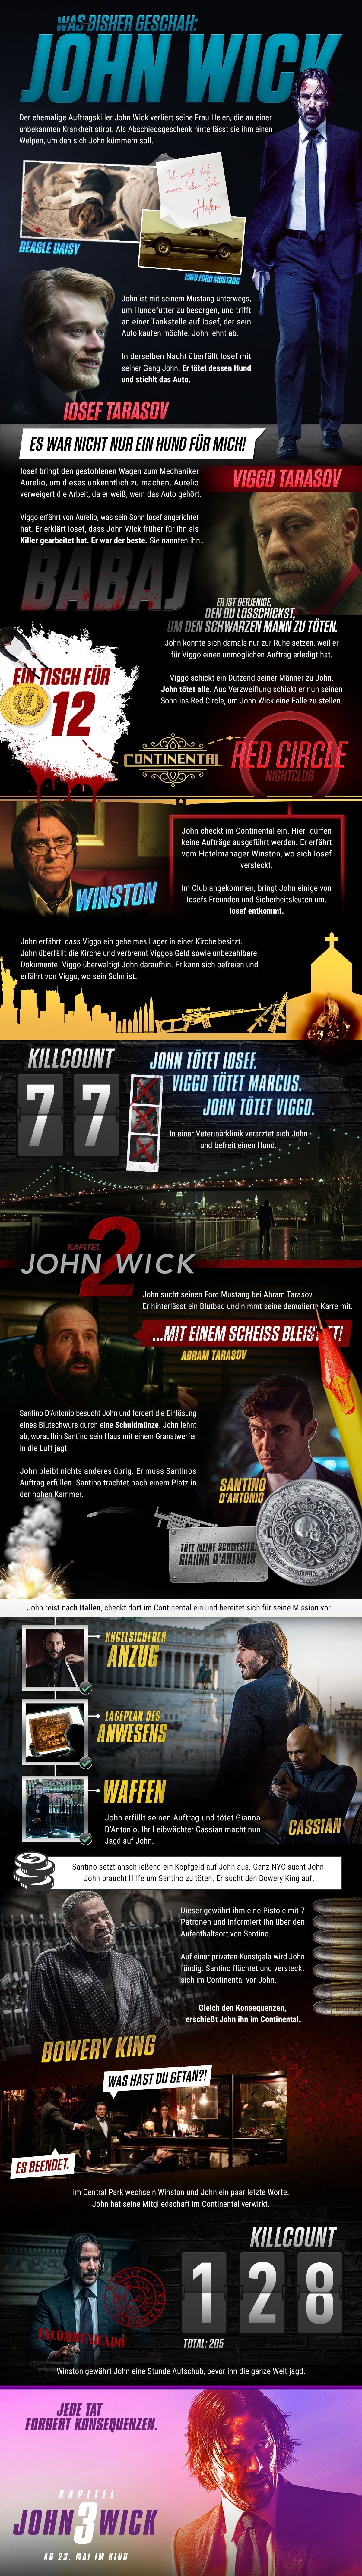 John Wick - Was bisher geschah